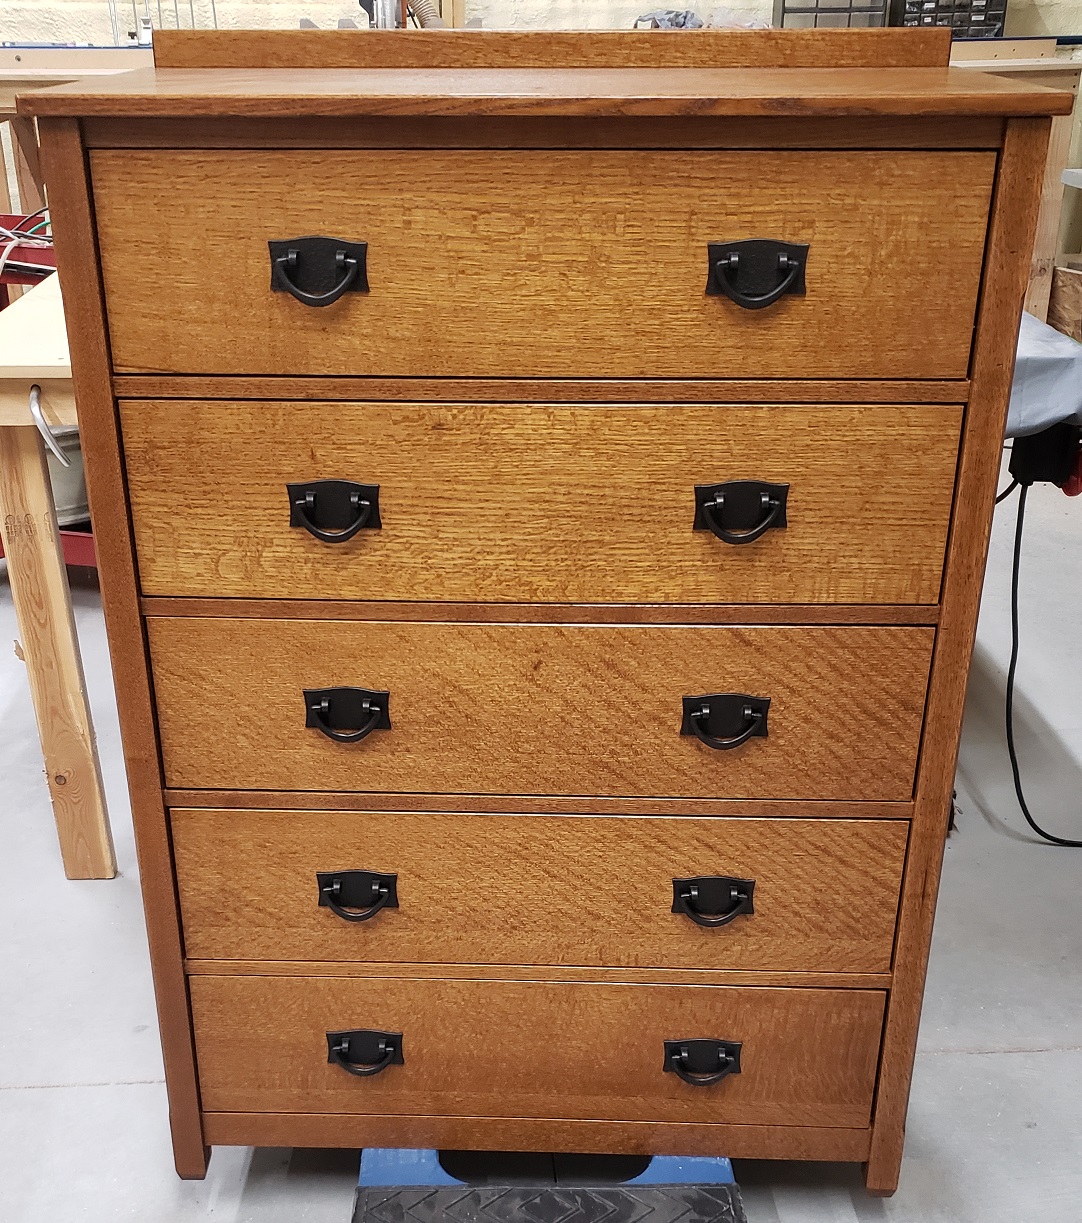 Five drawer mission style quartersawn oak dresser with black pulls